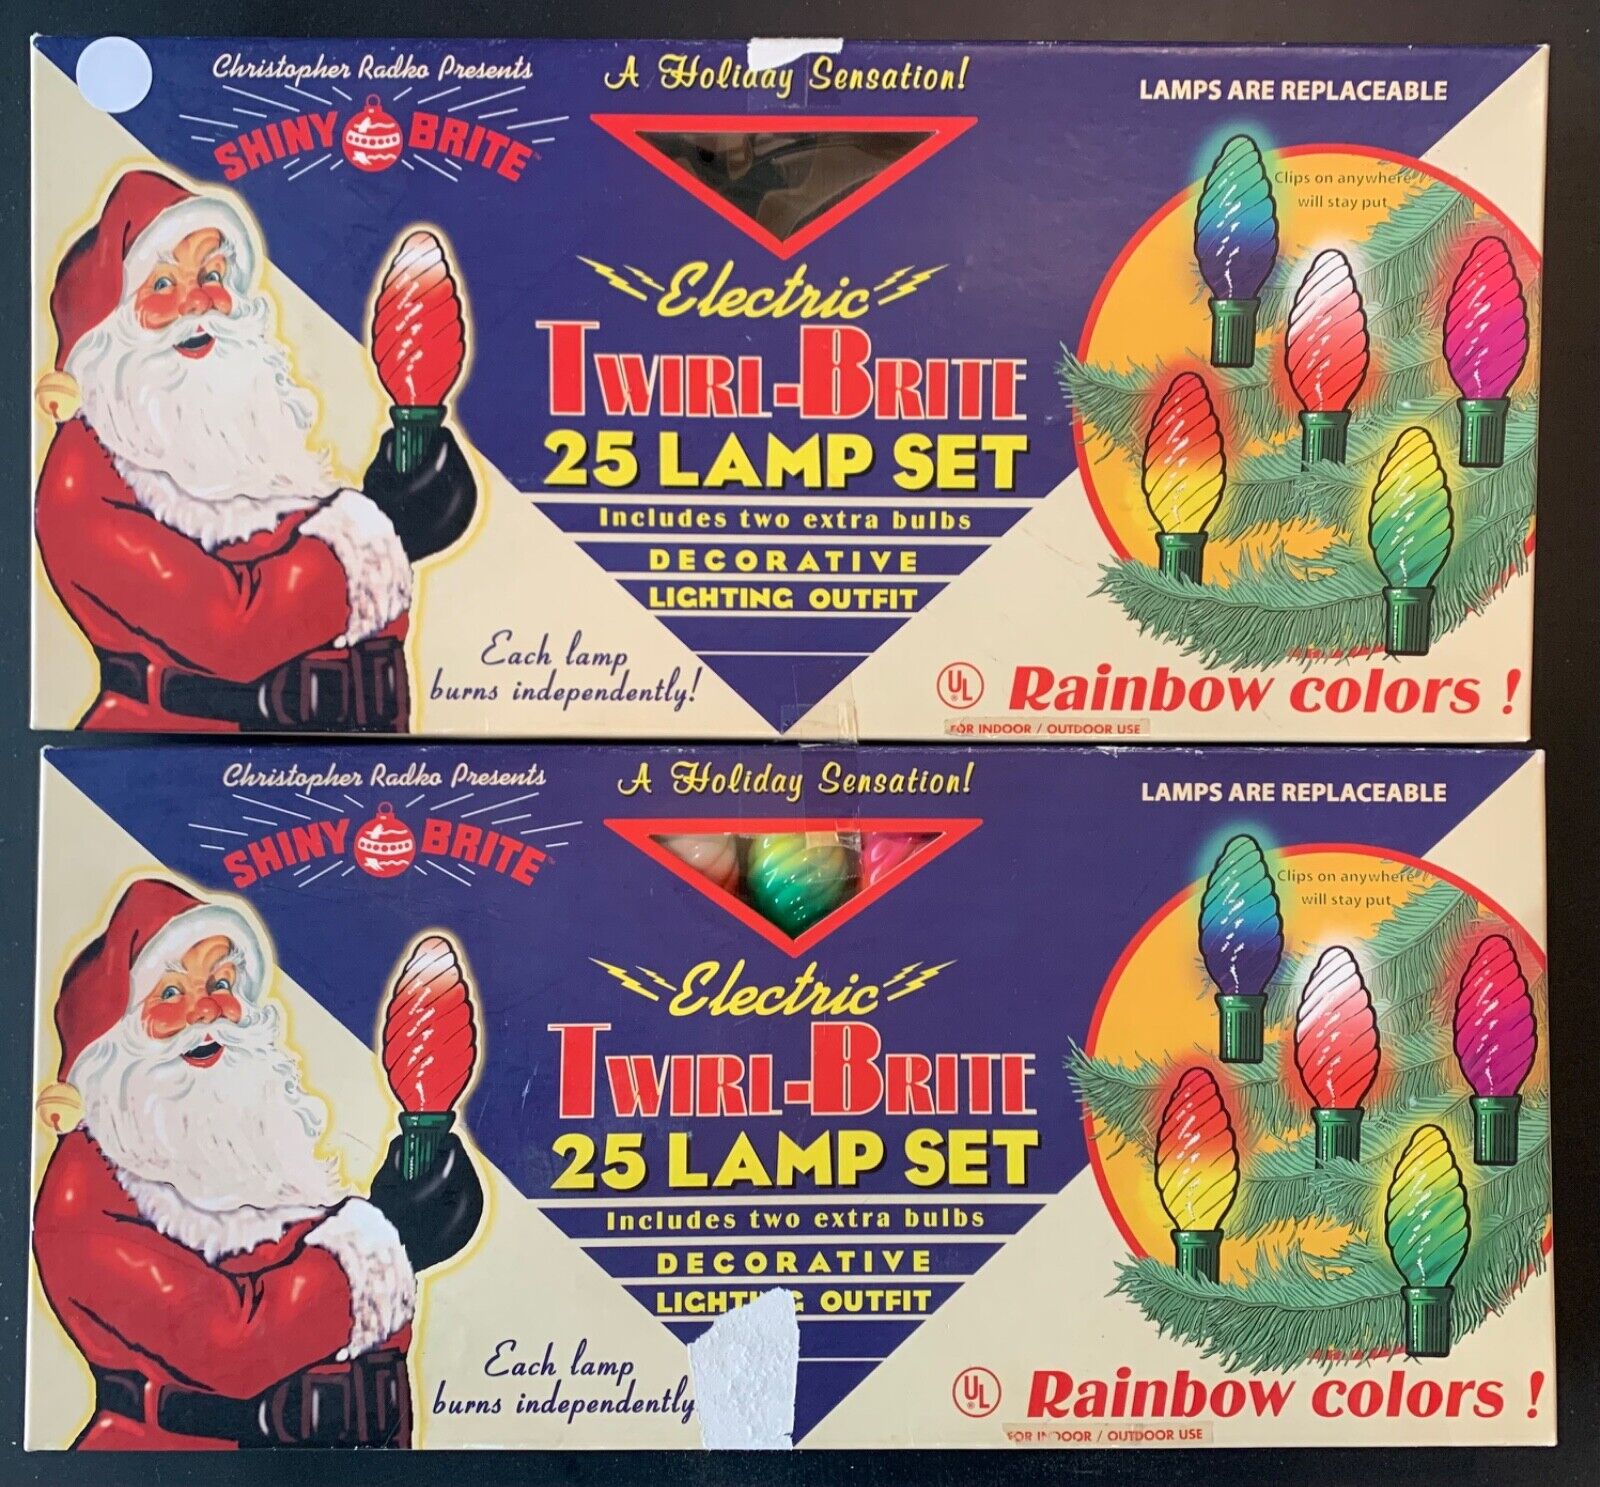 2 boxes of Christopher Radko Shiny Brite Electric Twirl-Brite Christmas Lights 